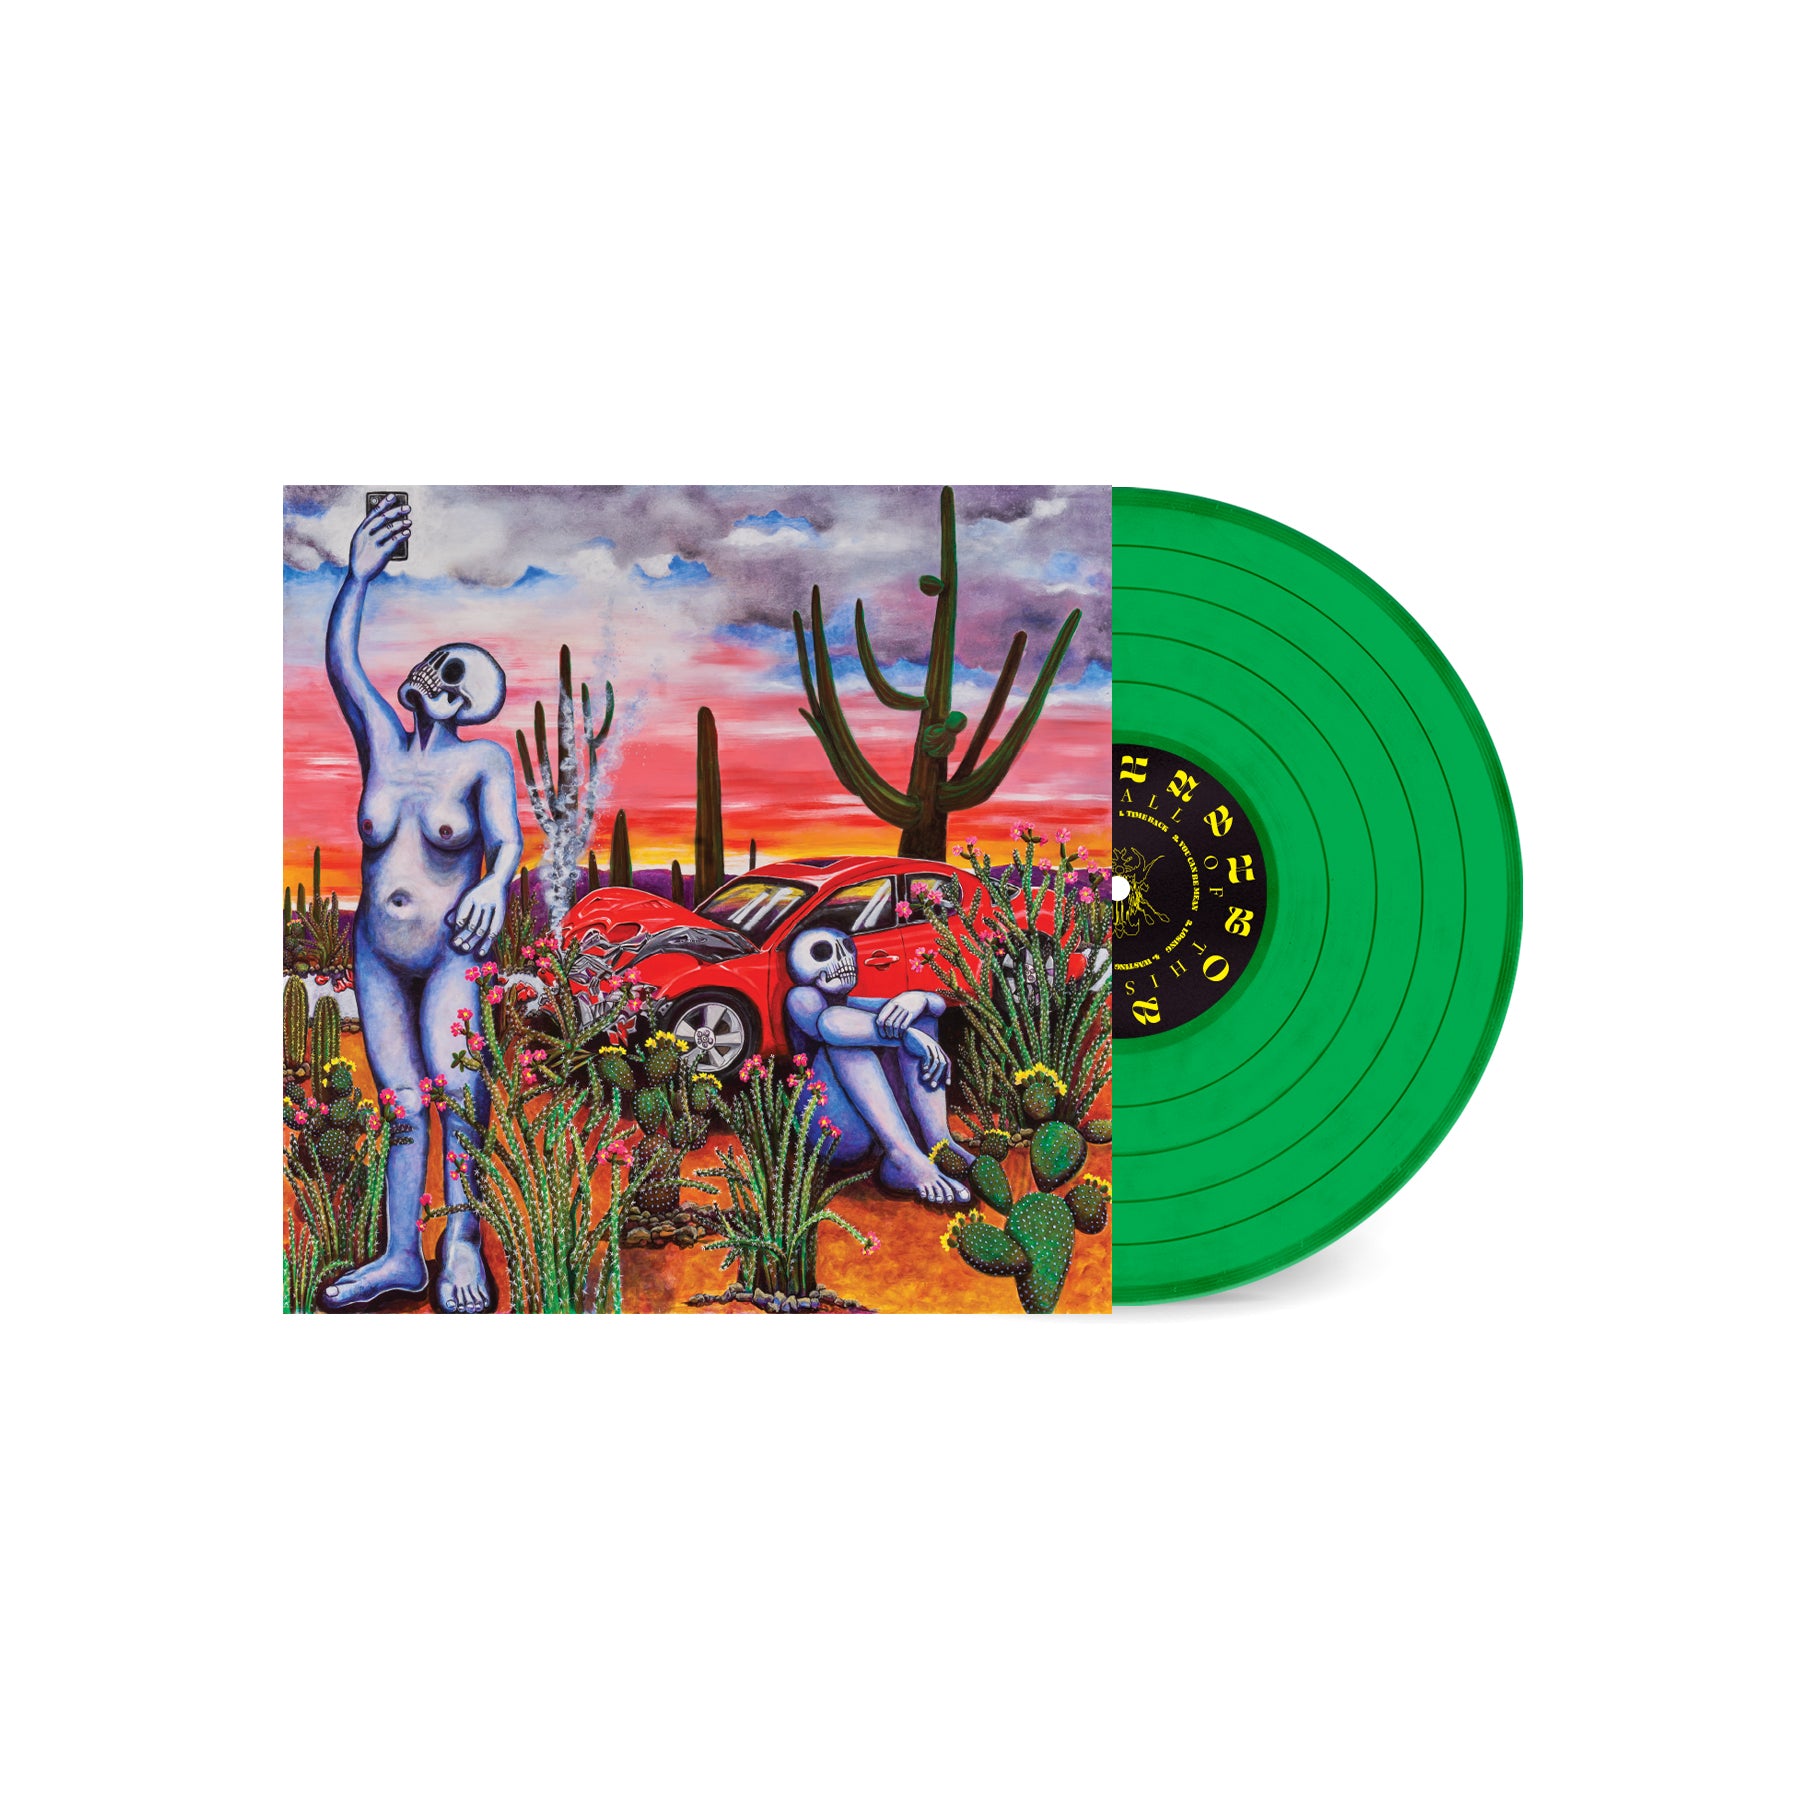 Indigo De Souza - All Of This Will End: Limited Green Vinyl LP